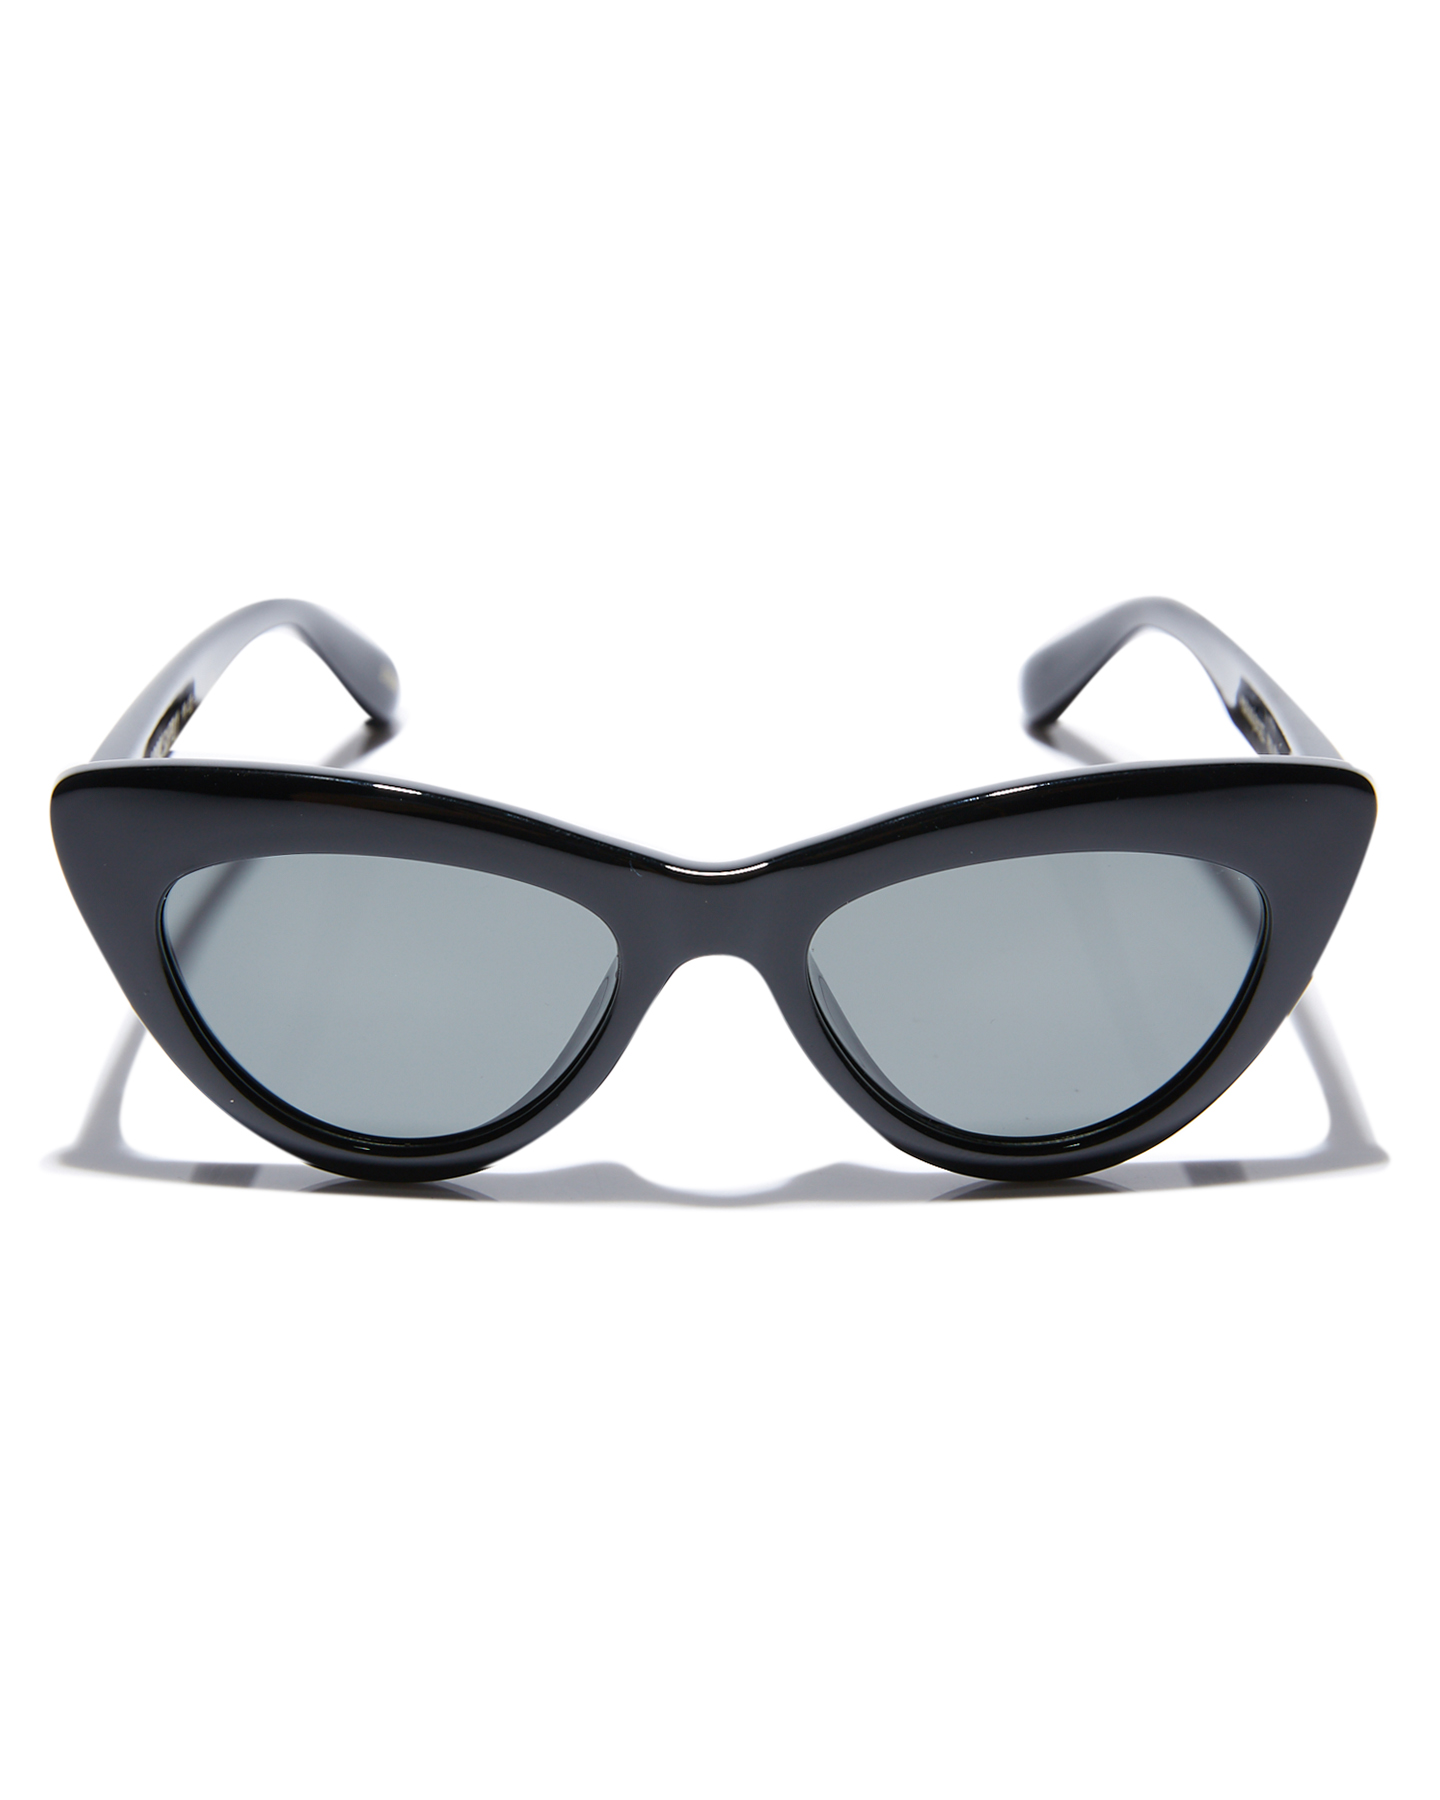 Local Supply Marina Sunglasses - Polished Black | SurfStitch